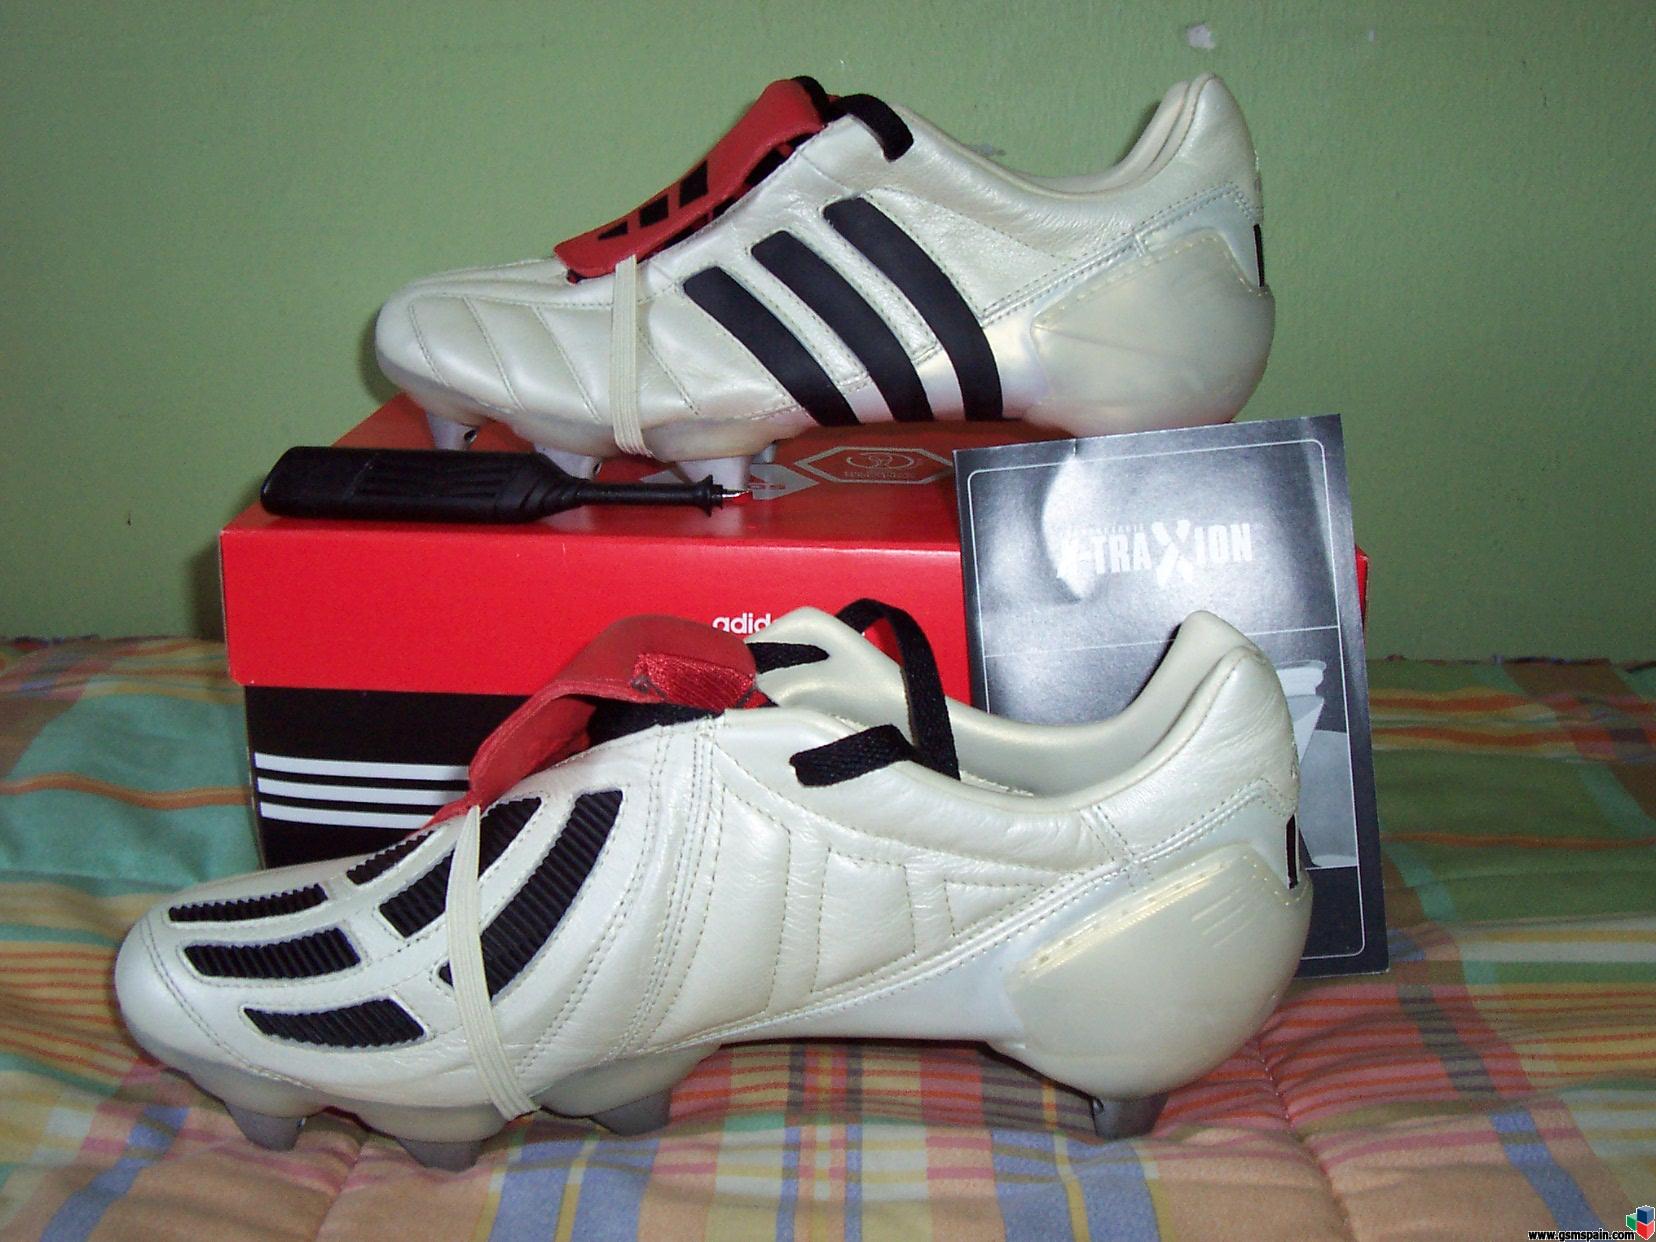 90+ Classic Football Boots ideas 